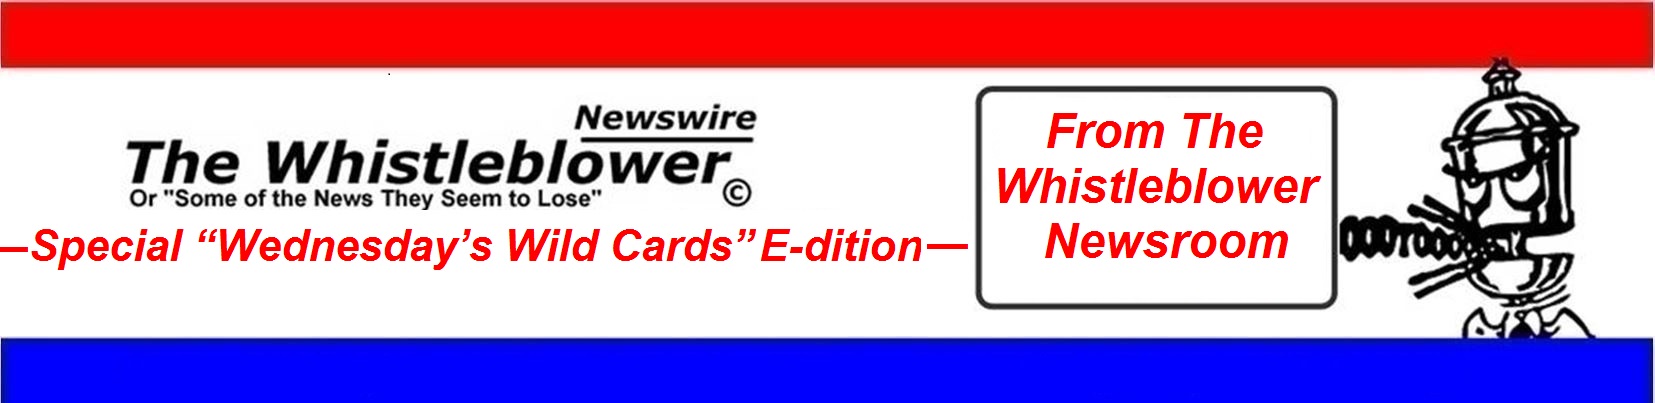 wednesday-wild-cards